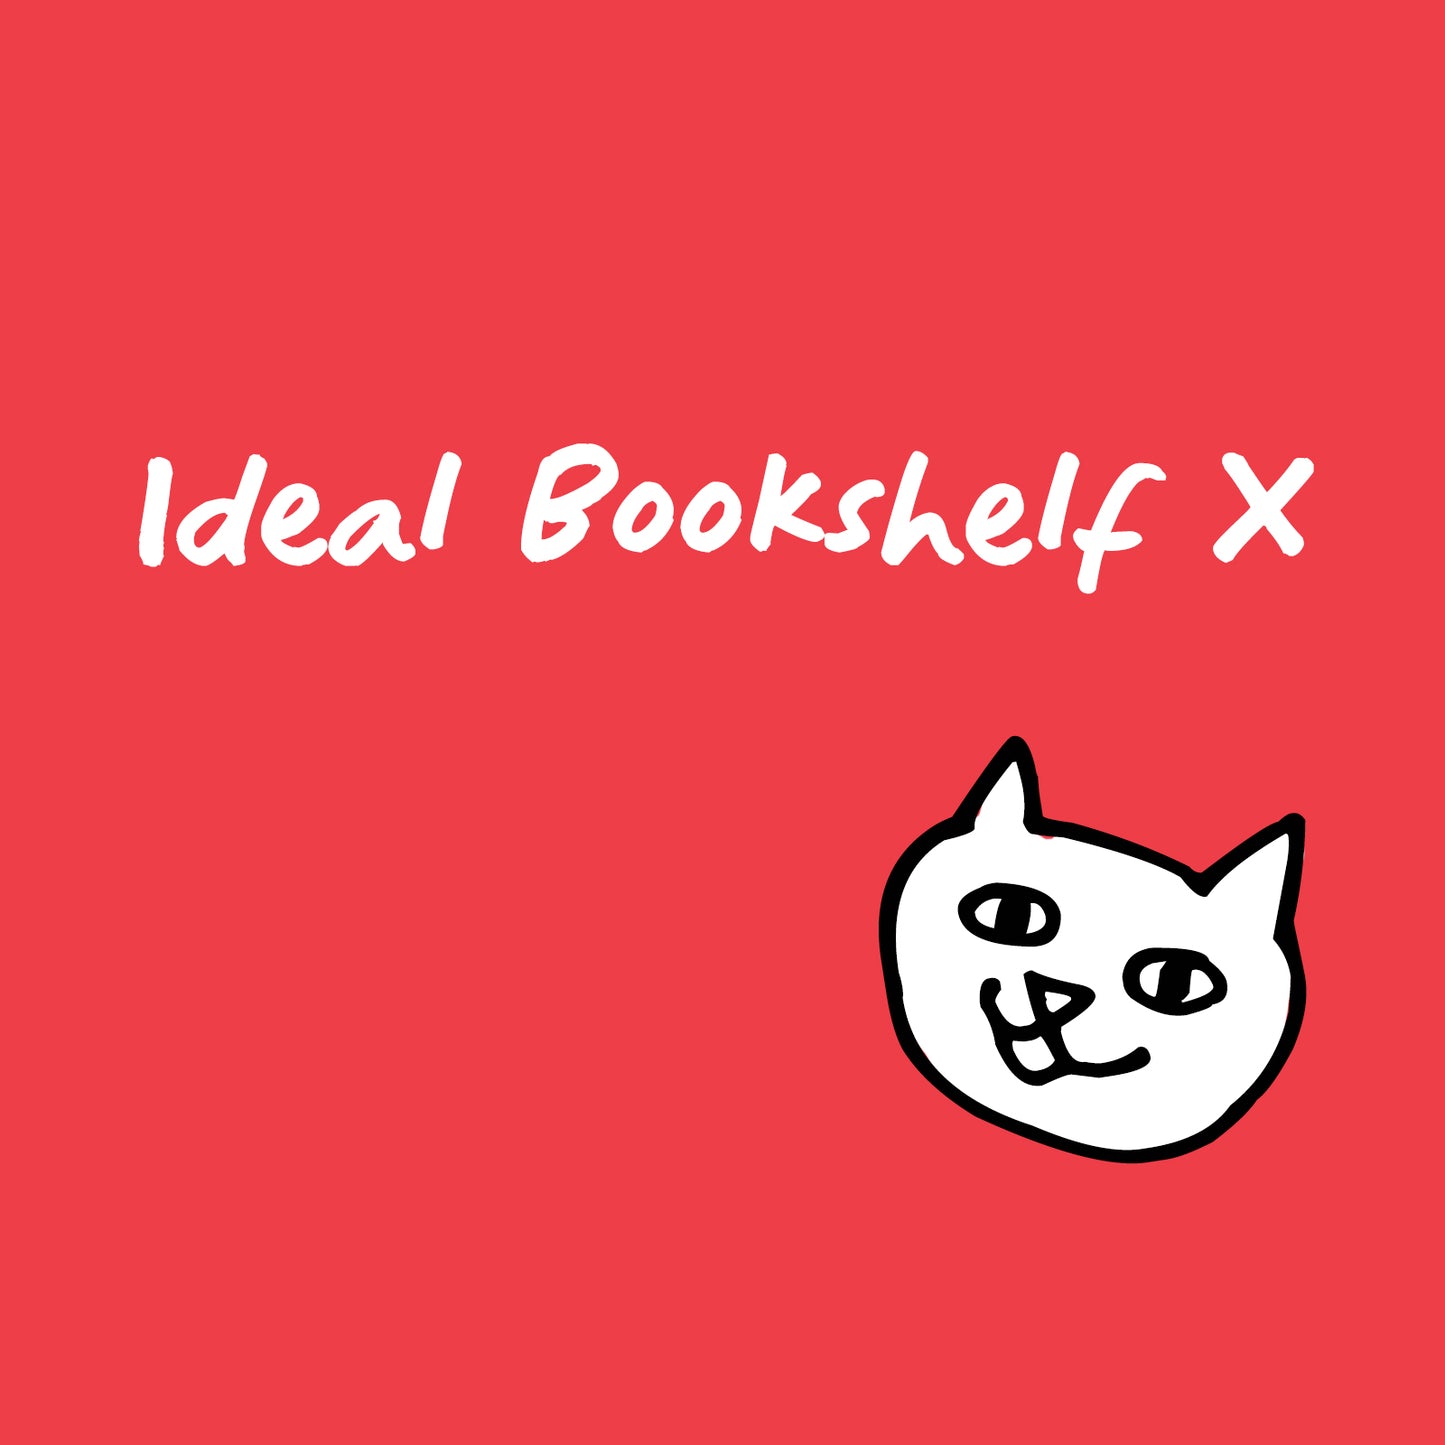 Ideal Bookshelf X